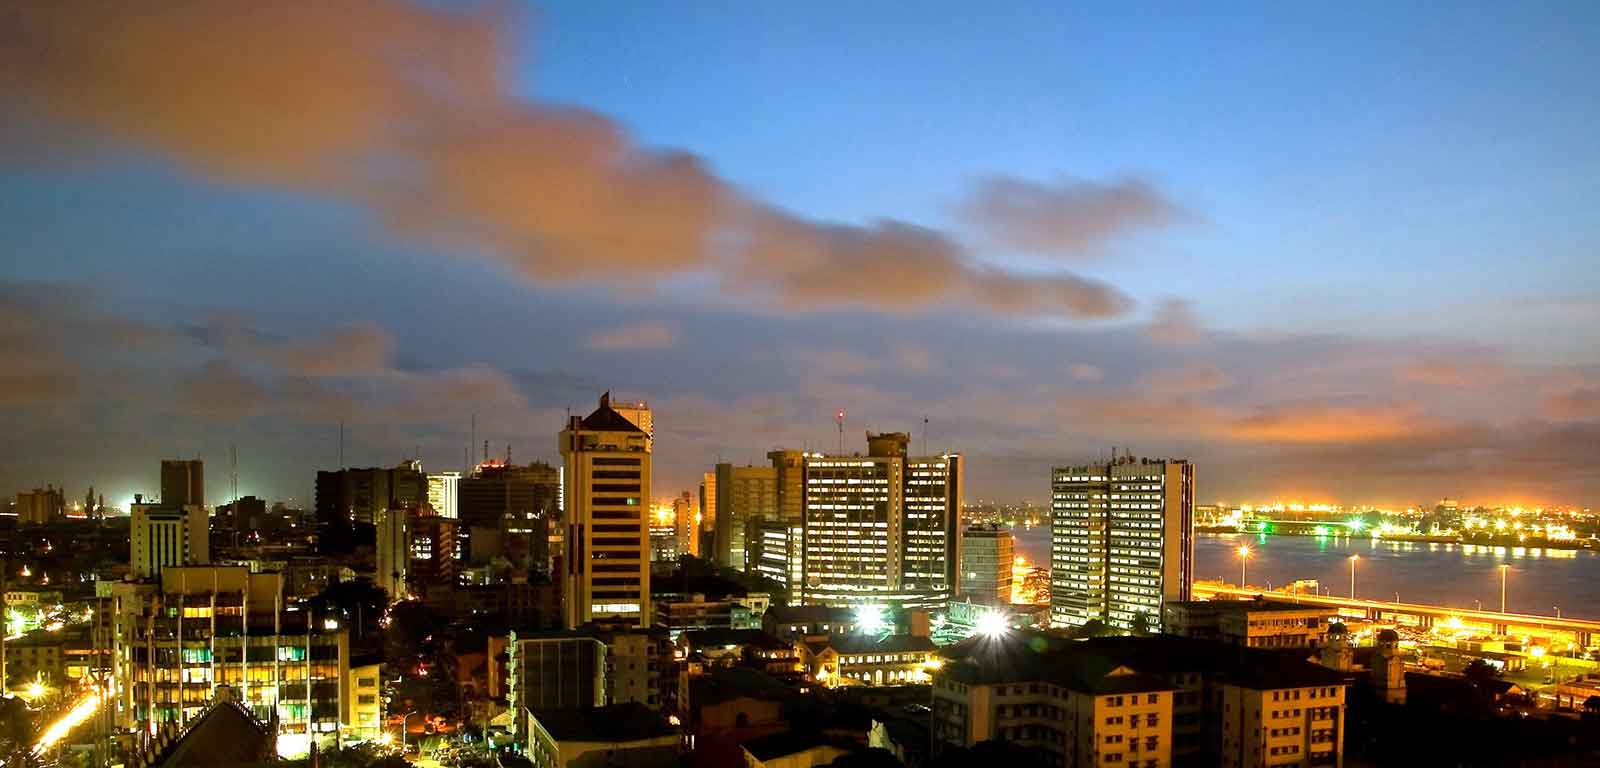 The beautiful city of Lagos at night